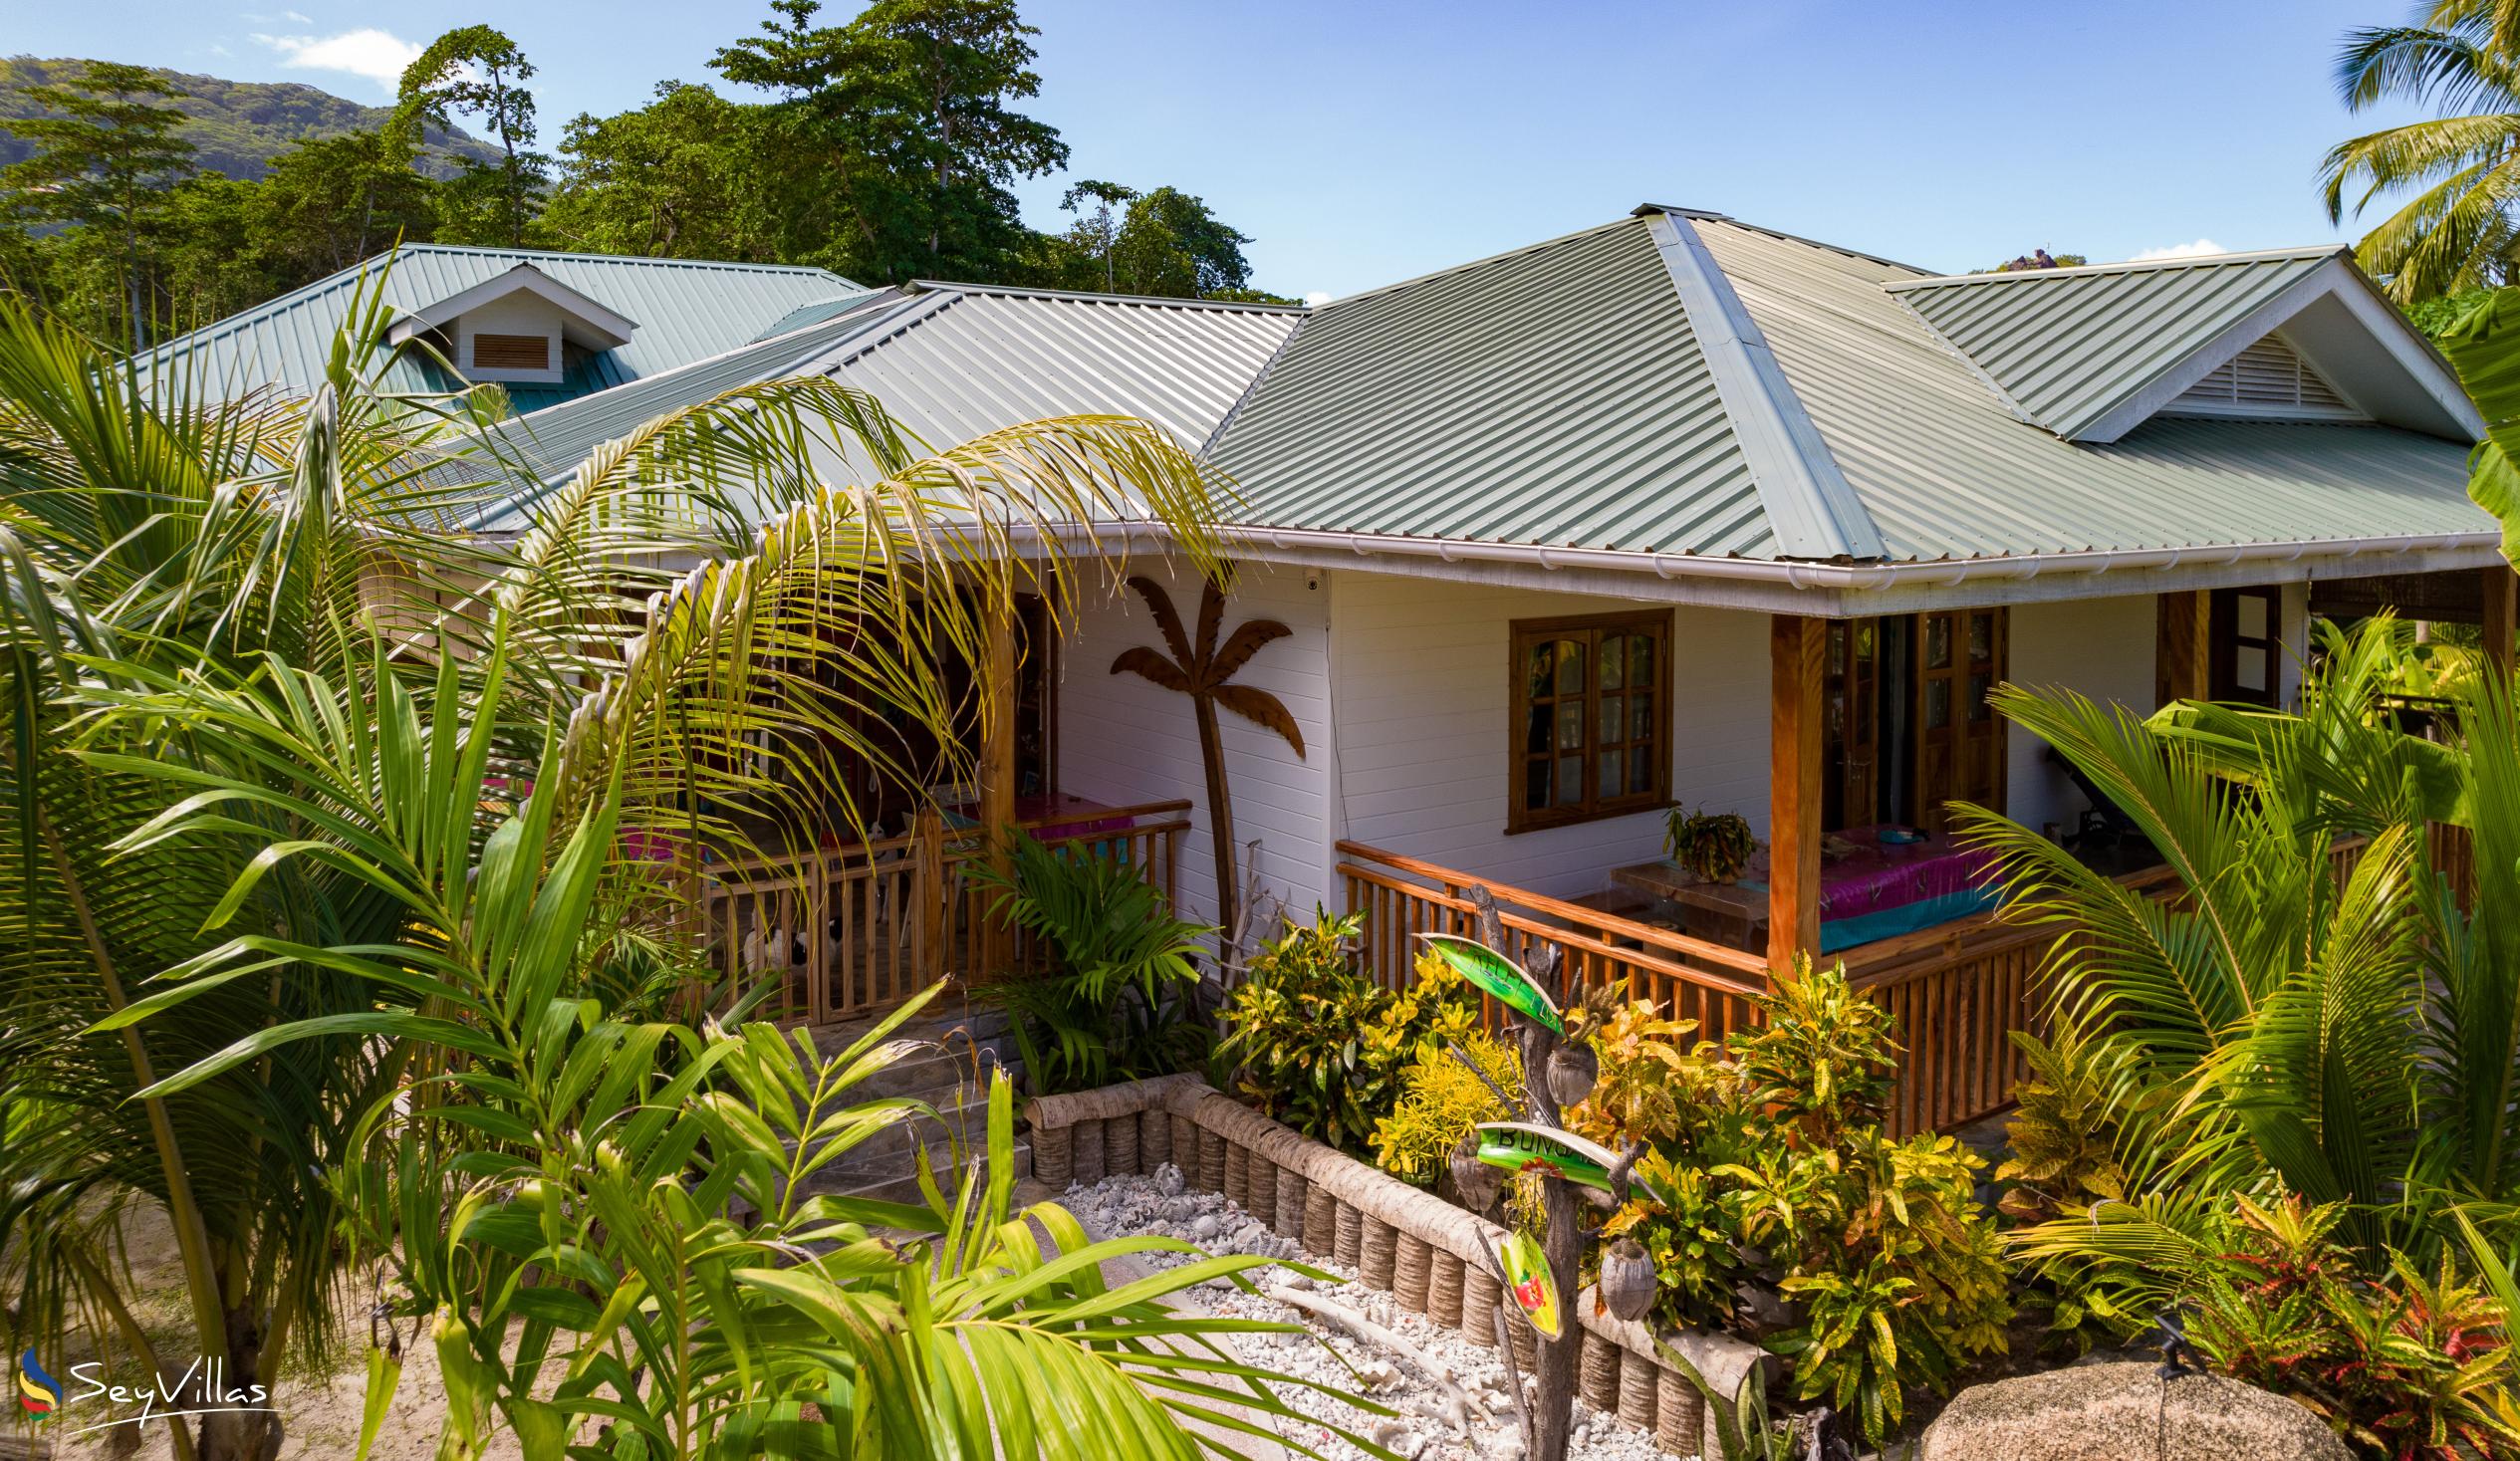 Foto 10: Coco de Mahi - Aussenbereich - La Digue (Seychellen)